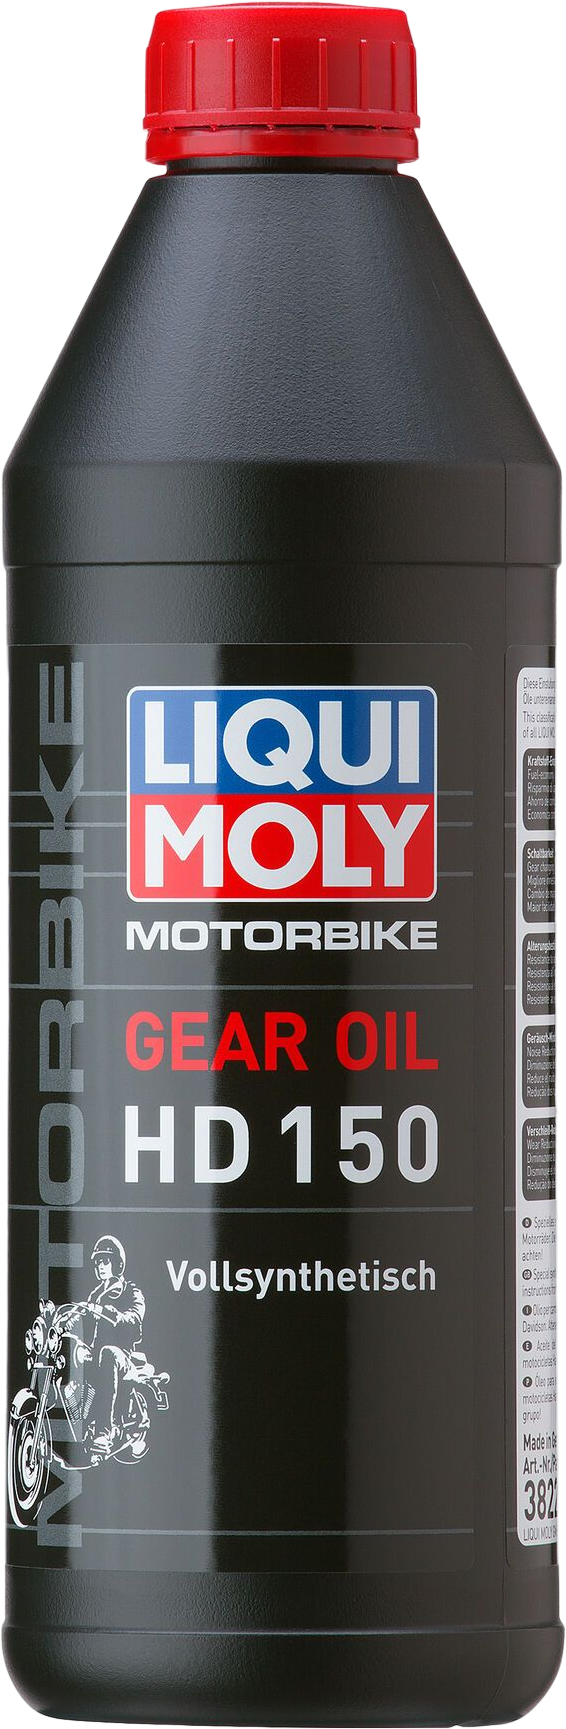 Liqui Moly Motorbike Gear Oil HD 150, 1 lt